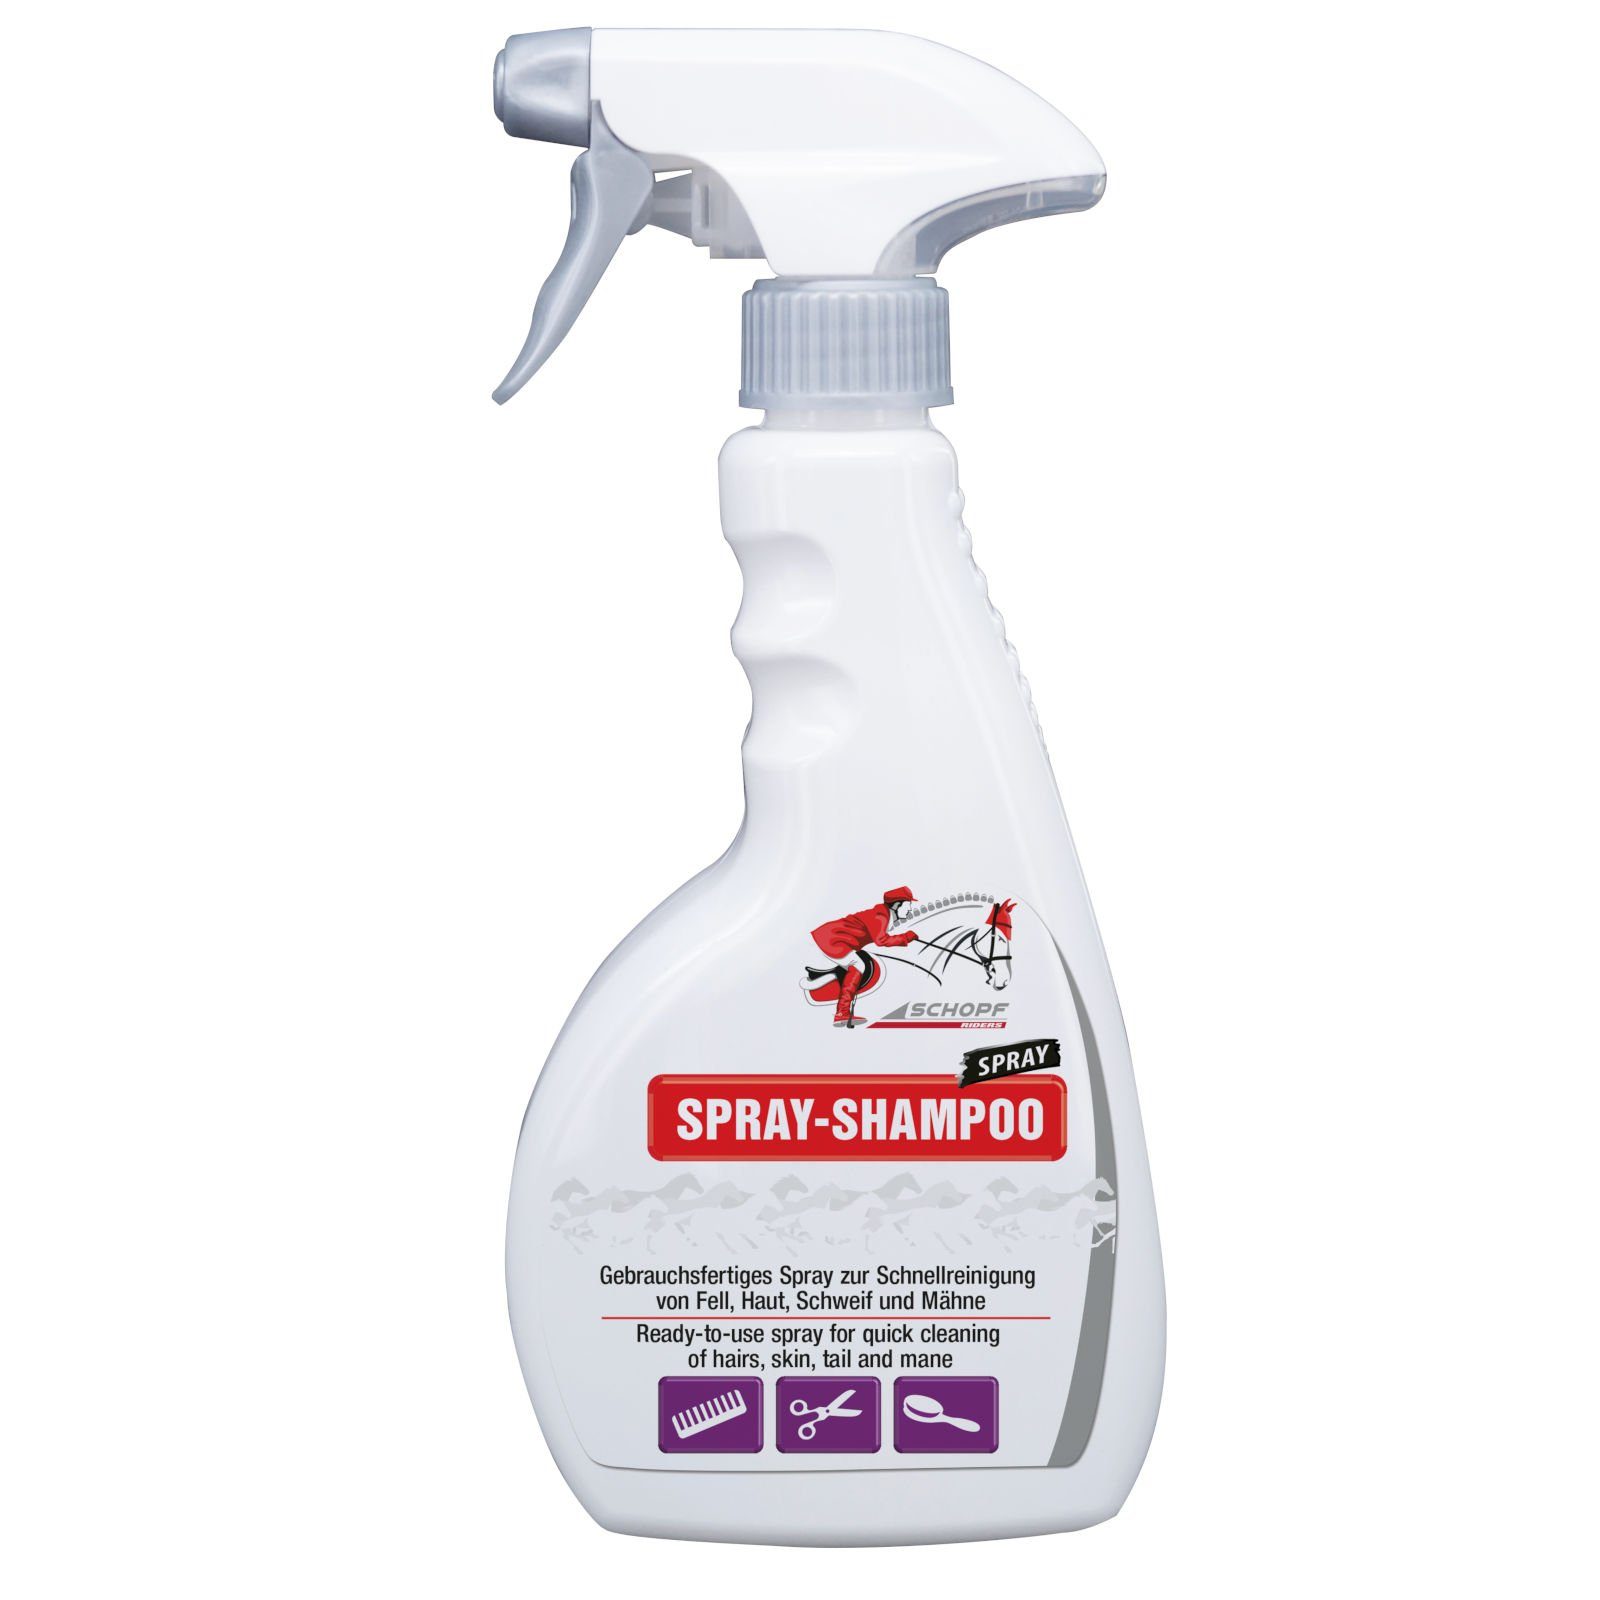 Schopf Riders Tiershampoo Shine Spray Shampoo für Pferde 500 ml